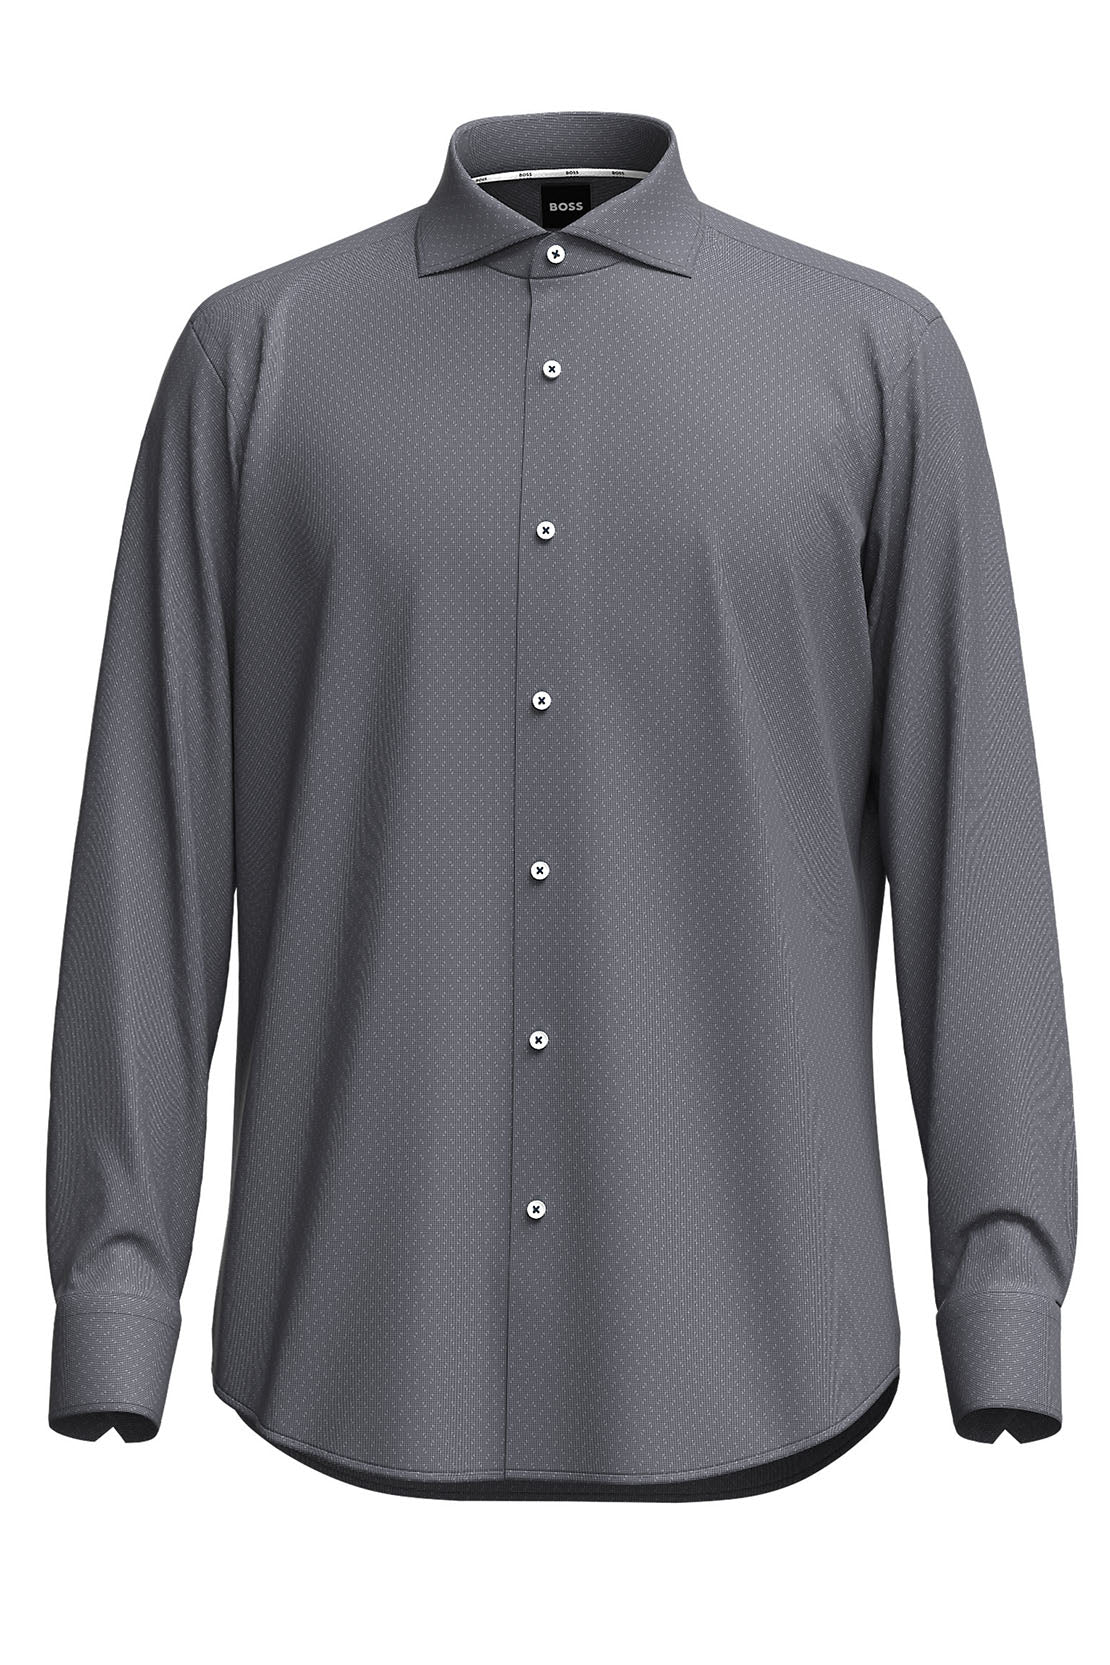 BOSS - H-JOE-SPREAD Navy Blue Cotton Stretch Shirt 50502627 410